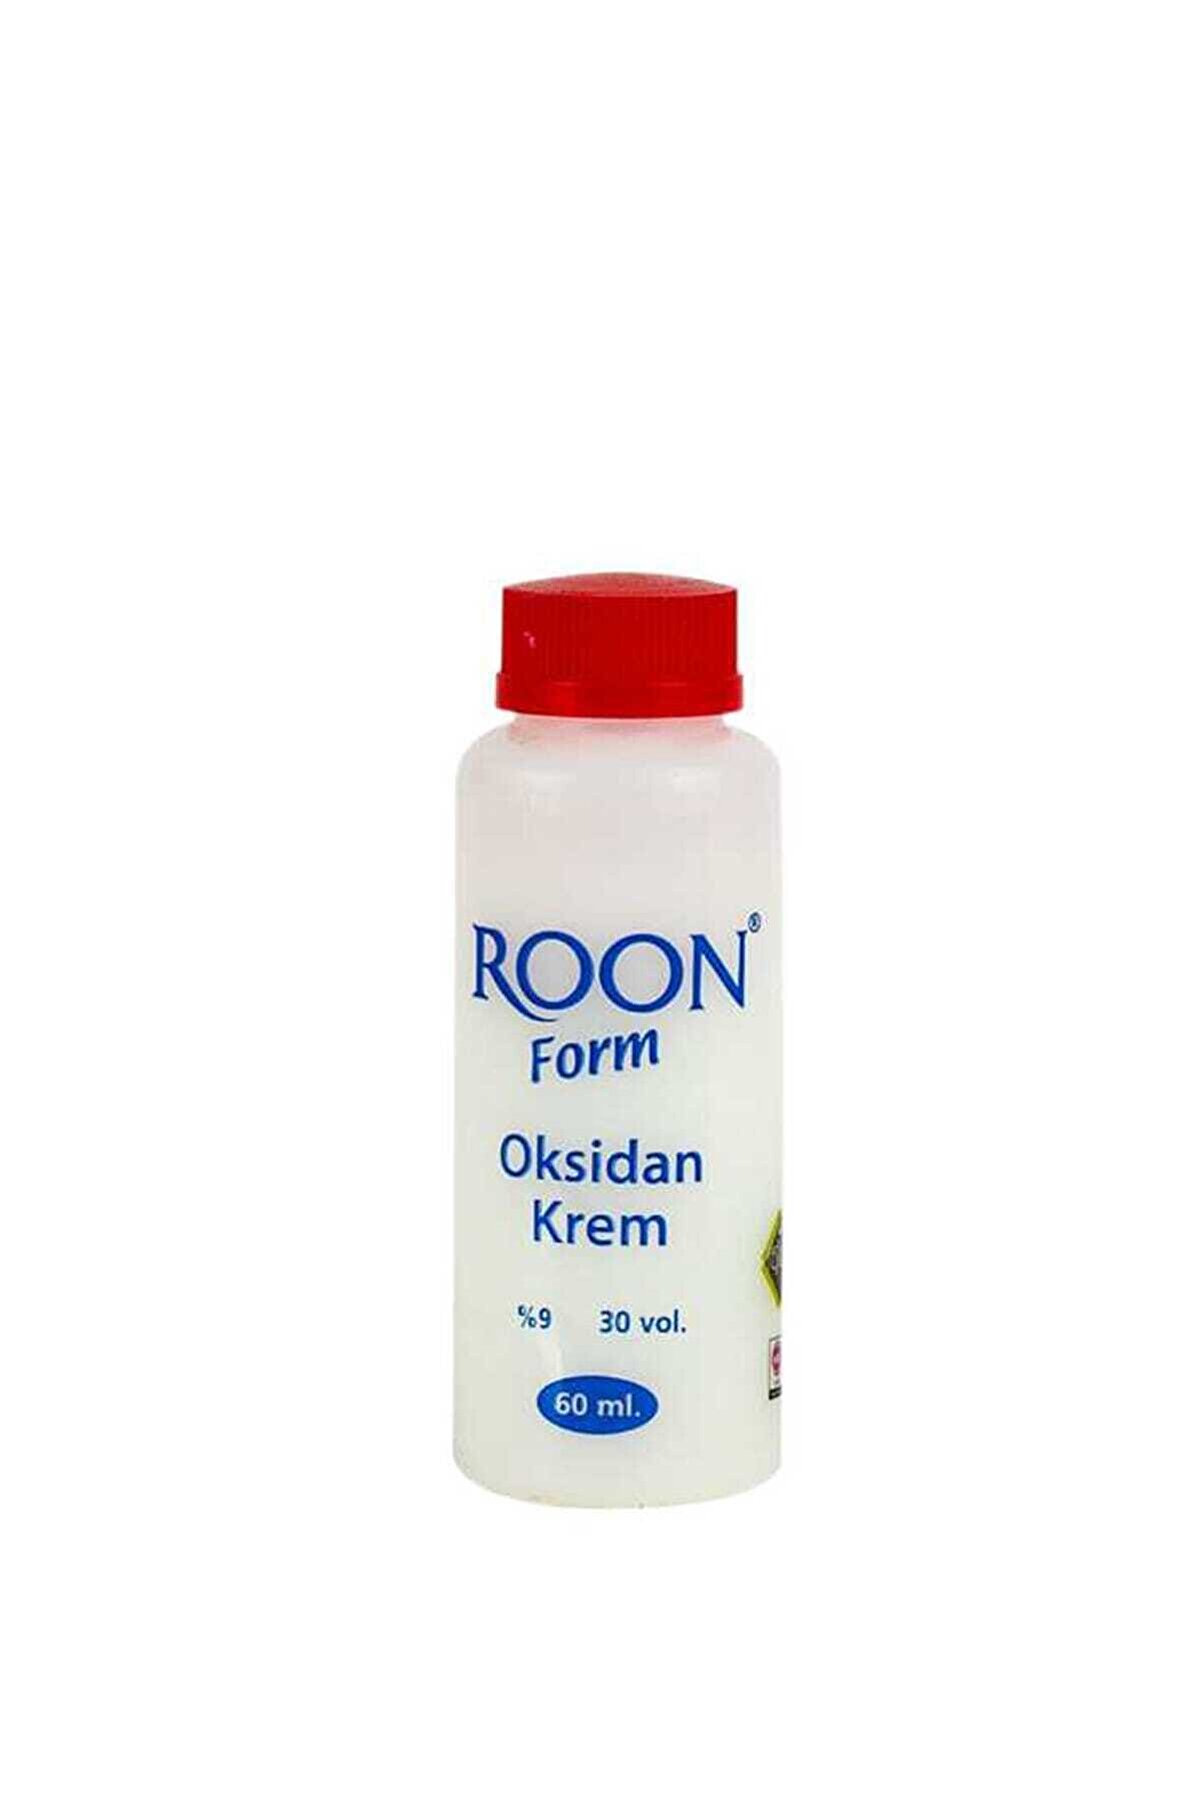 Roon Form Oksidan Krem %9 30 Volüm 60 ml